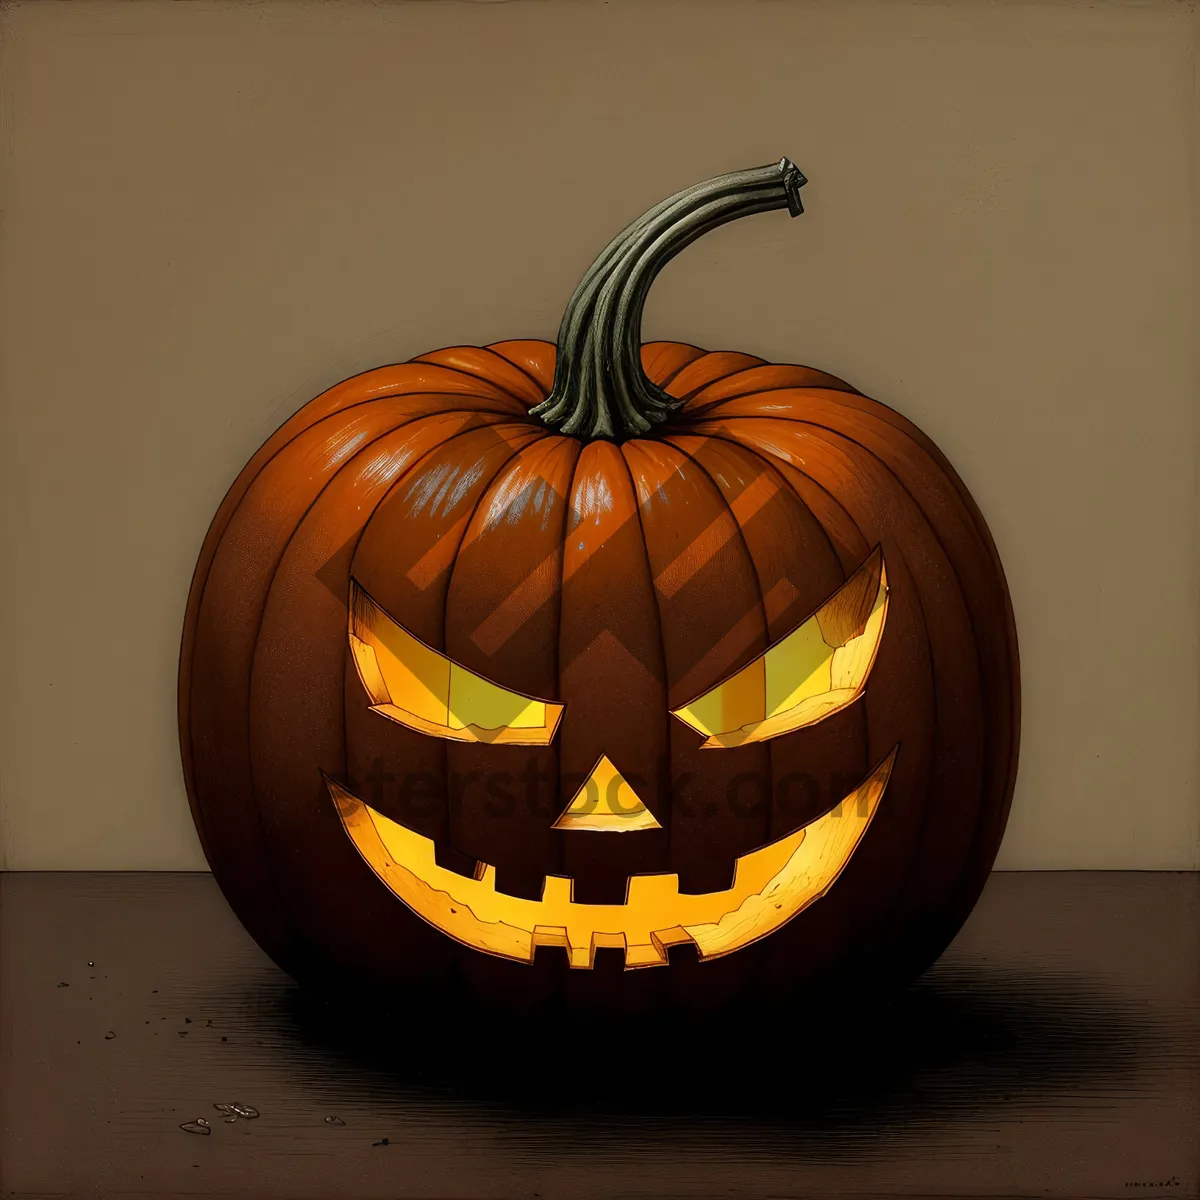 Picture of Spooky Autumn Pumpkin Lantern for Halloween Celebration